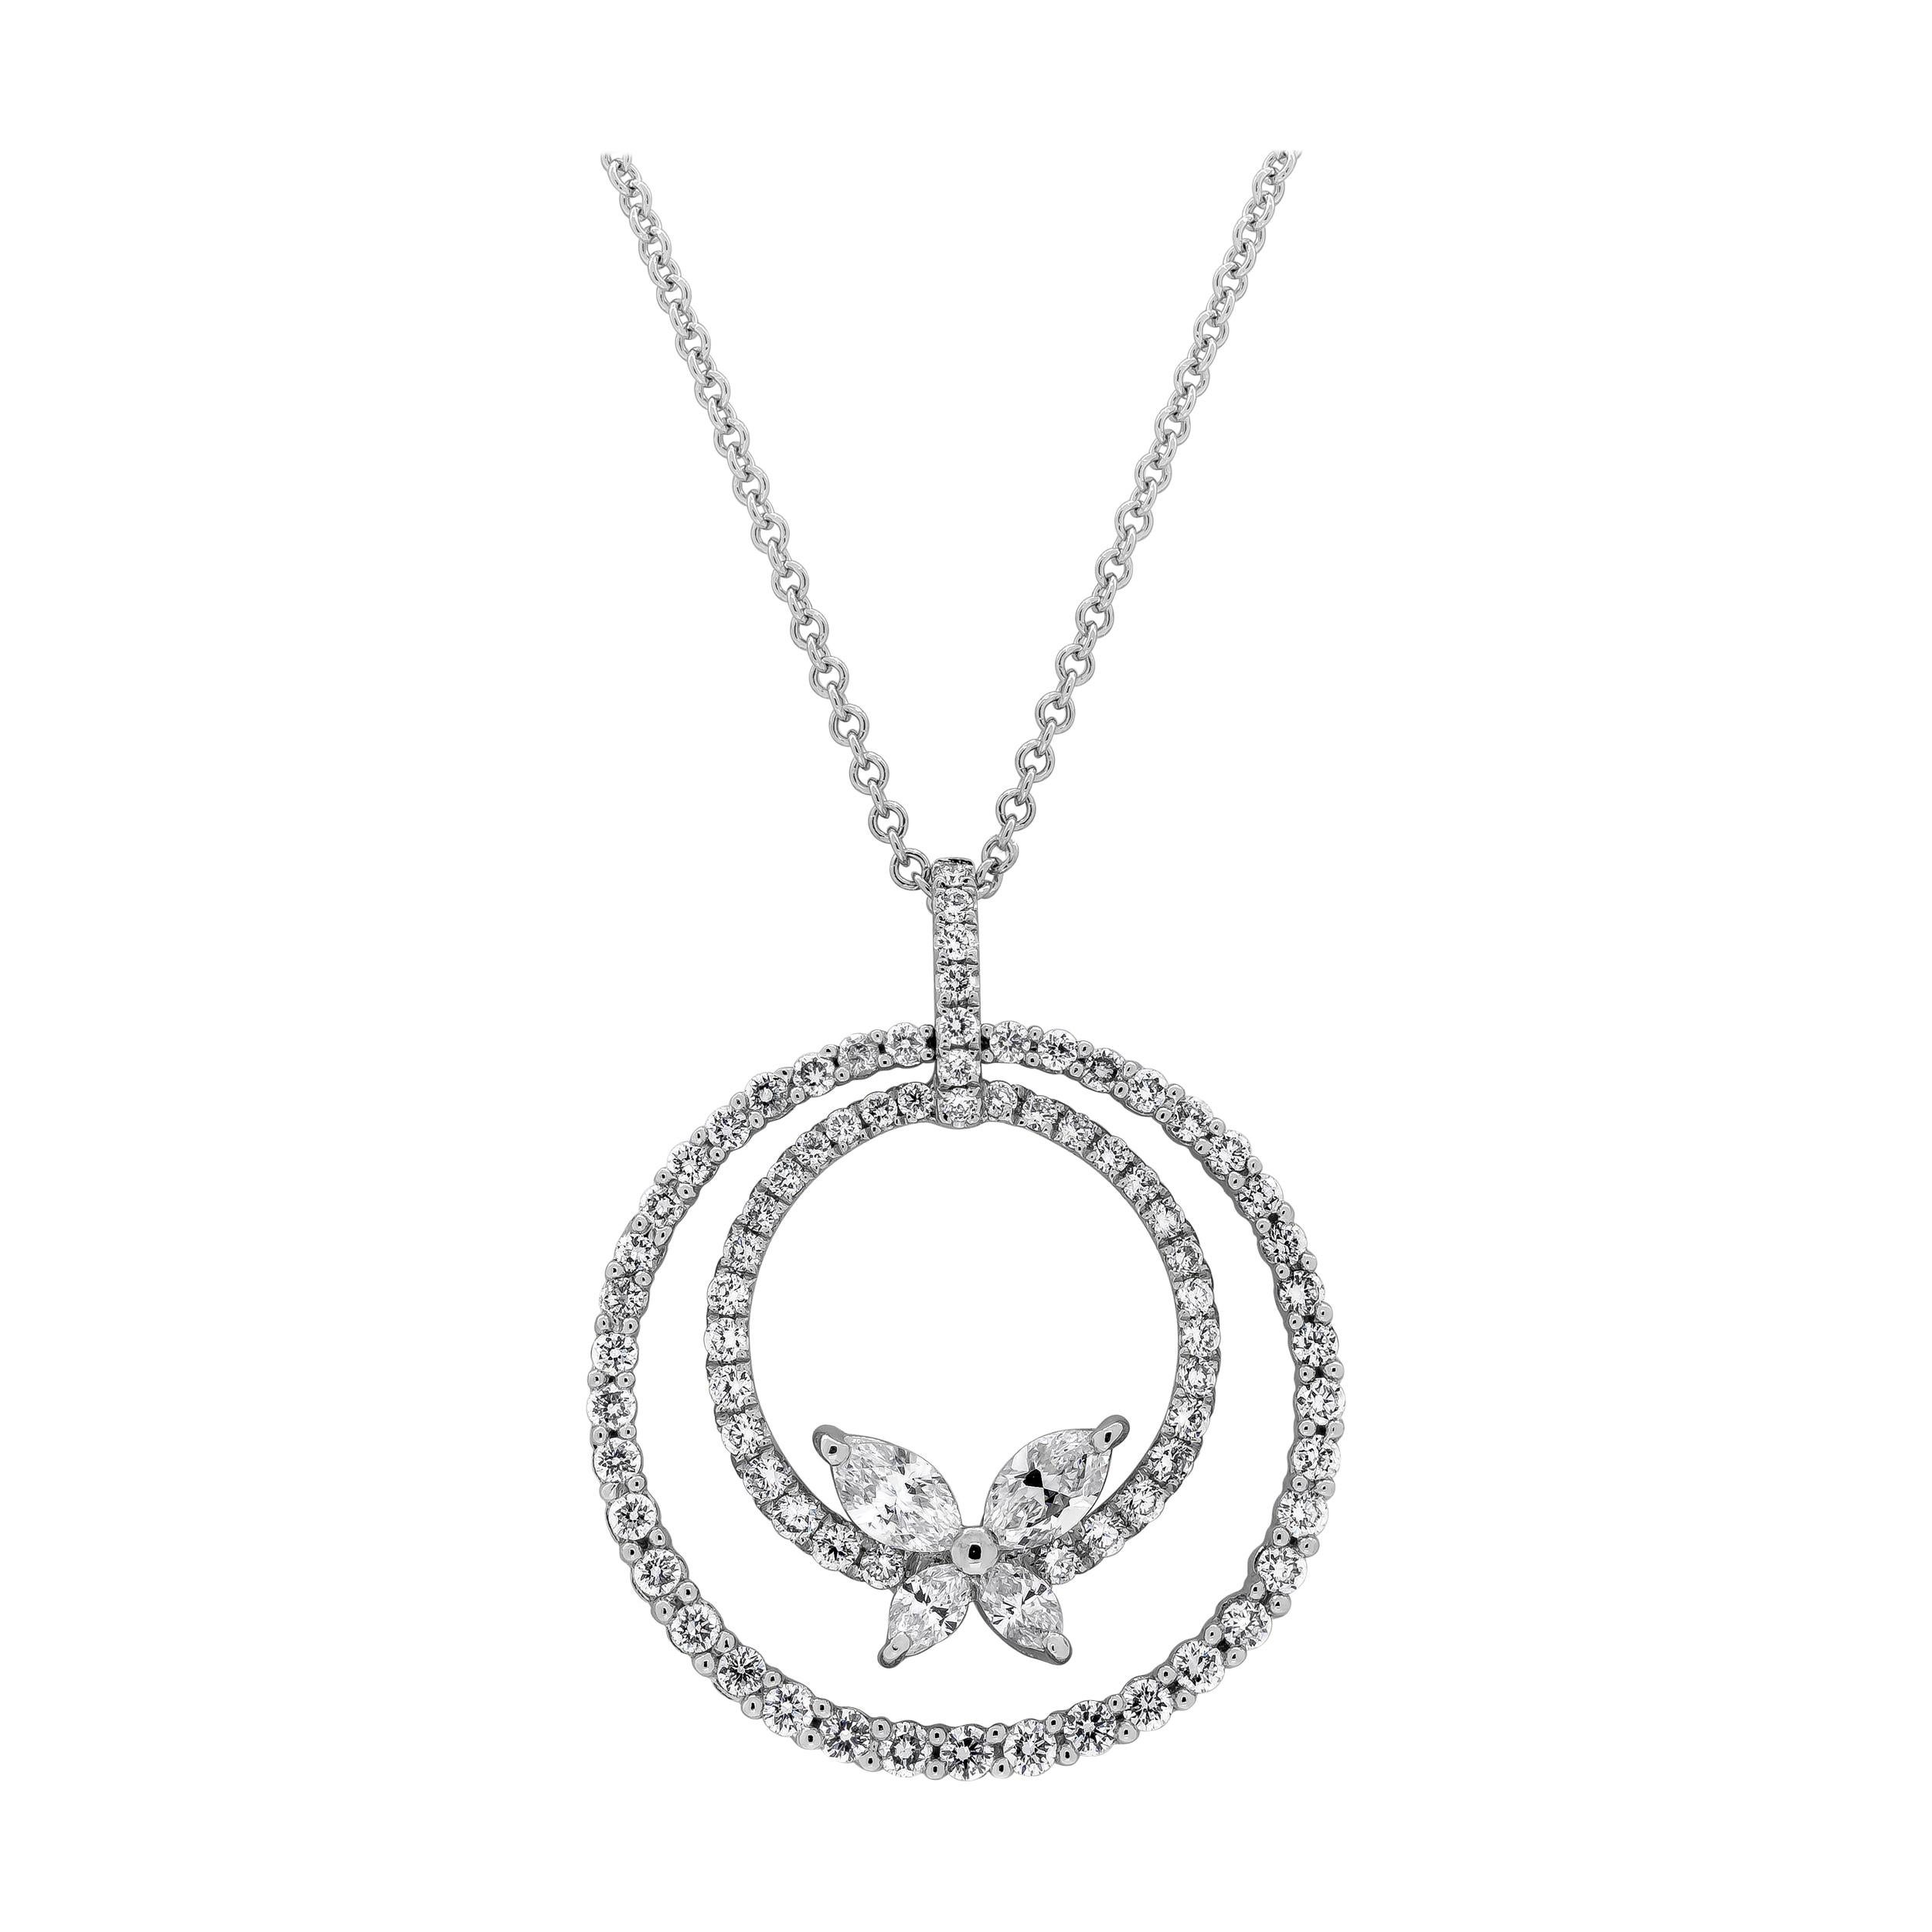 Roman Malakov 1.40 Carats Total Round and Marquis Cut Diamonds Pendant Necklace